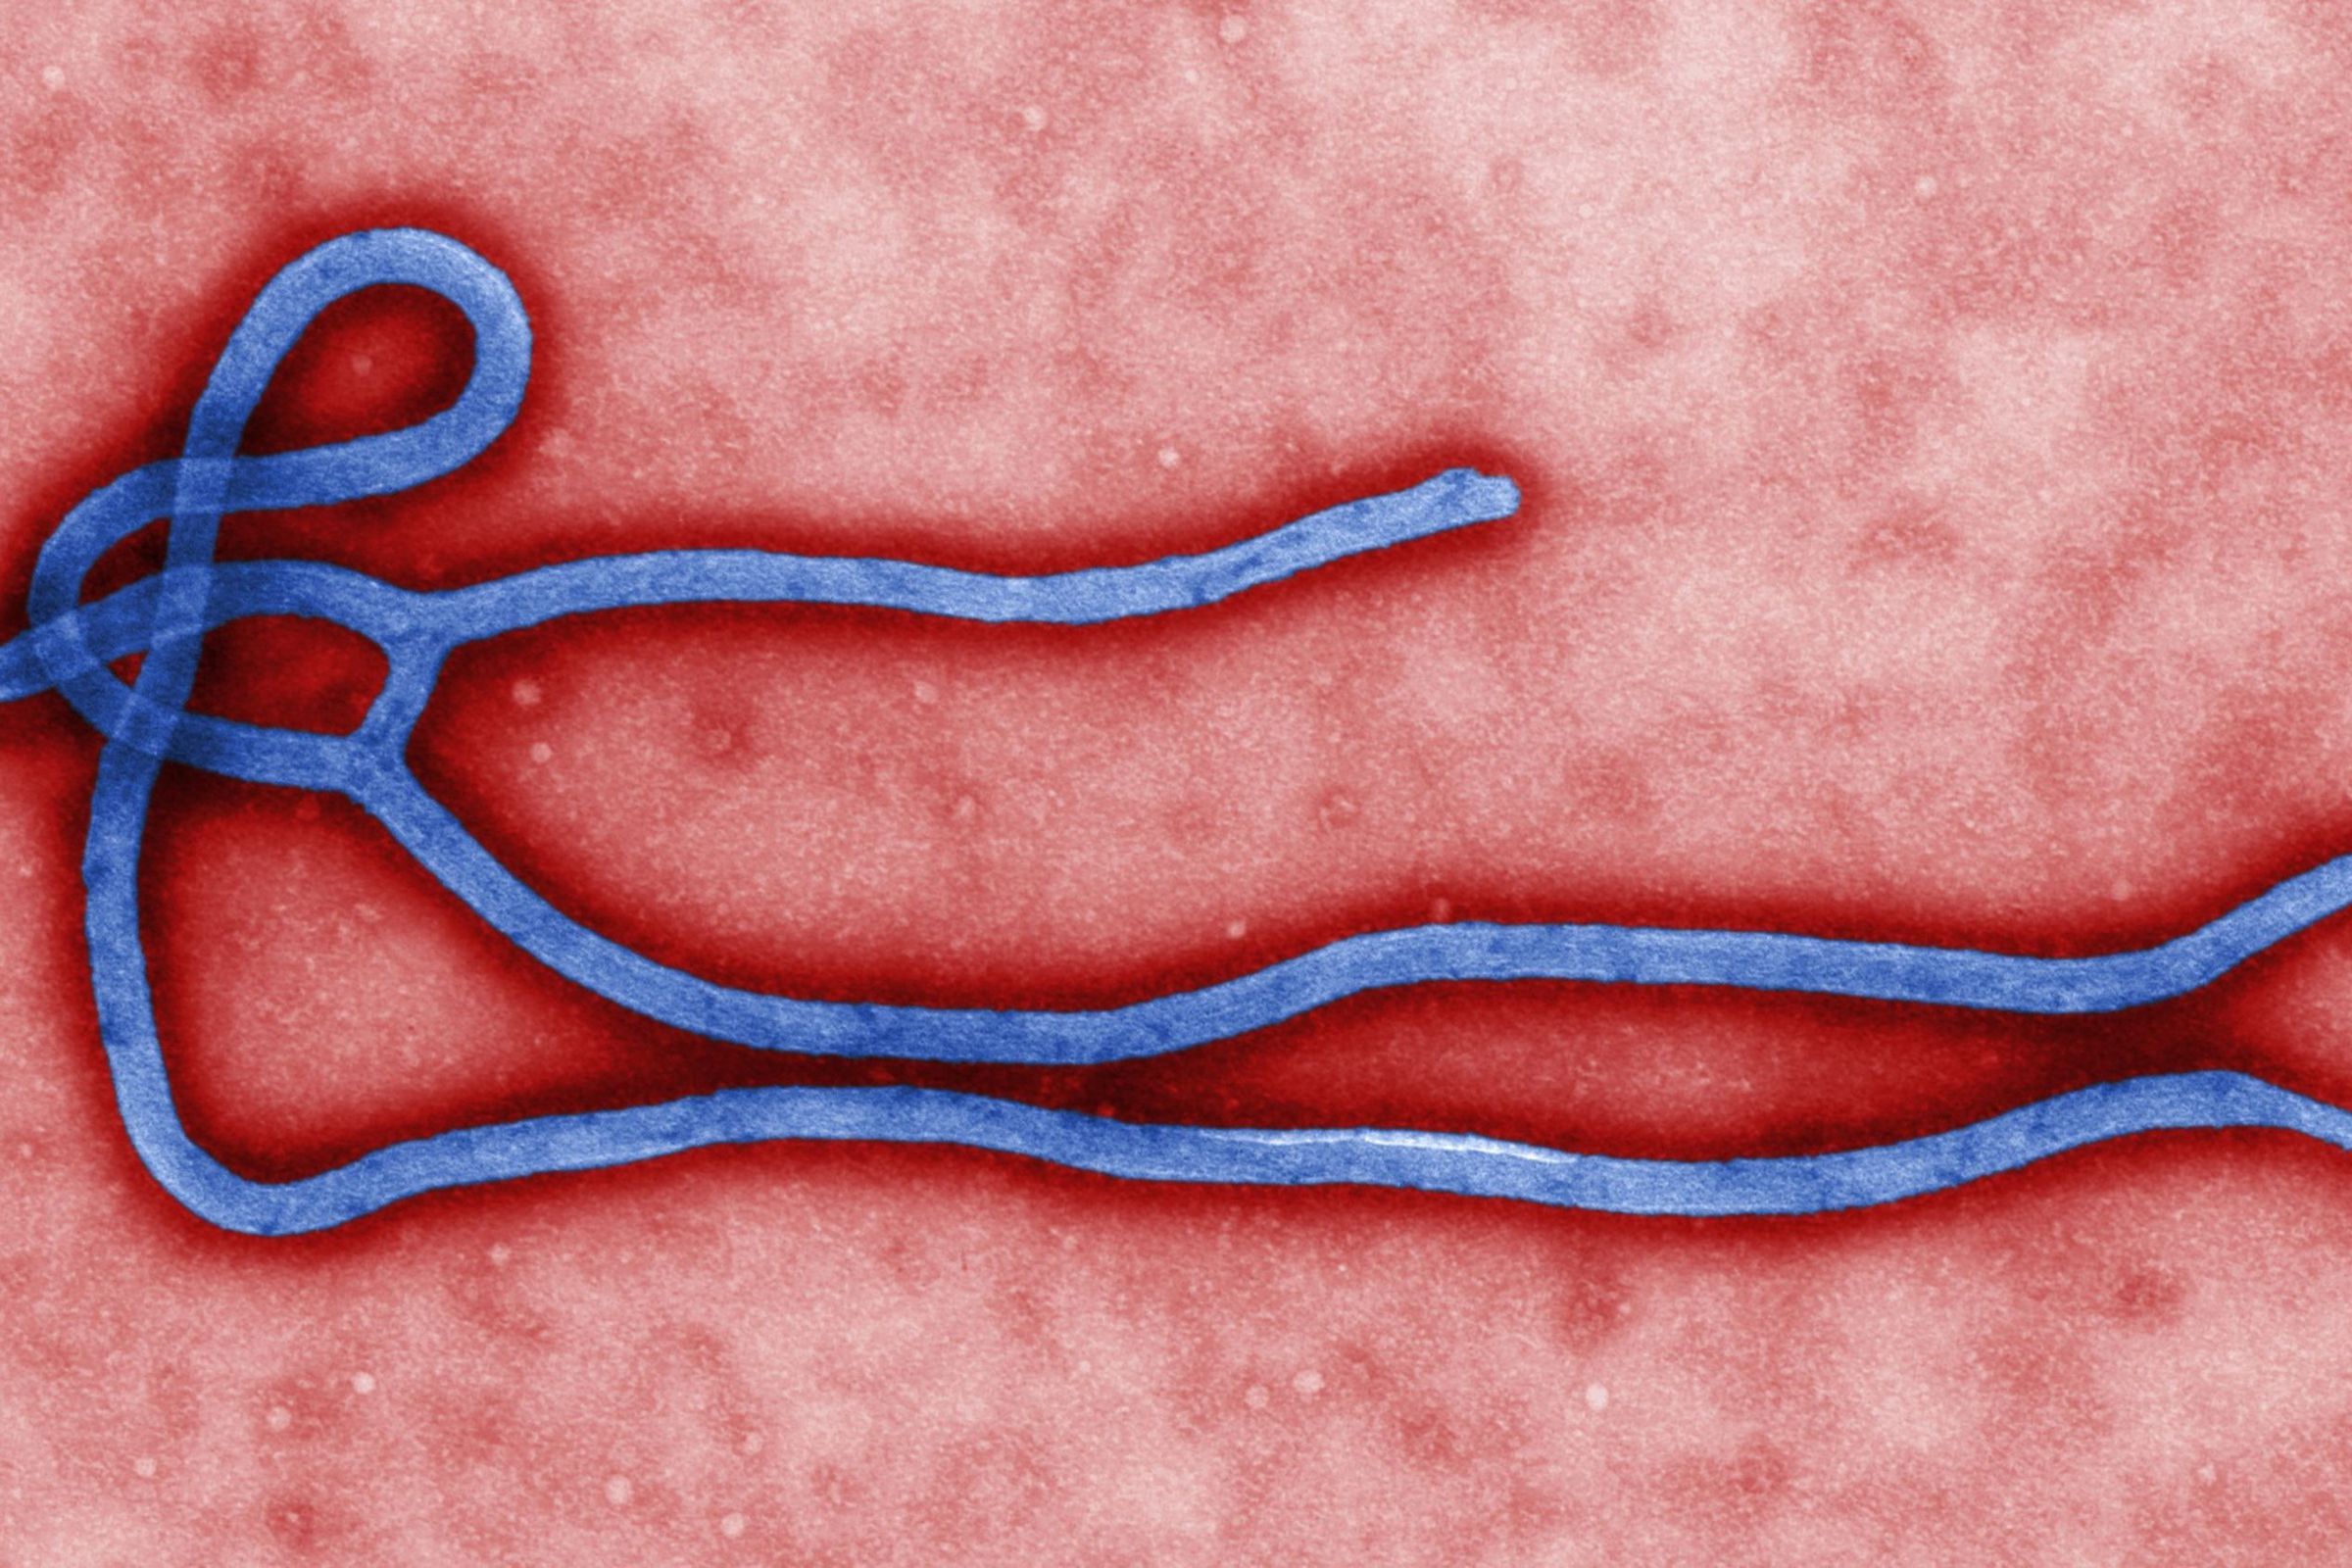 ebola-virus-wikimedia-commons